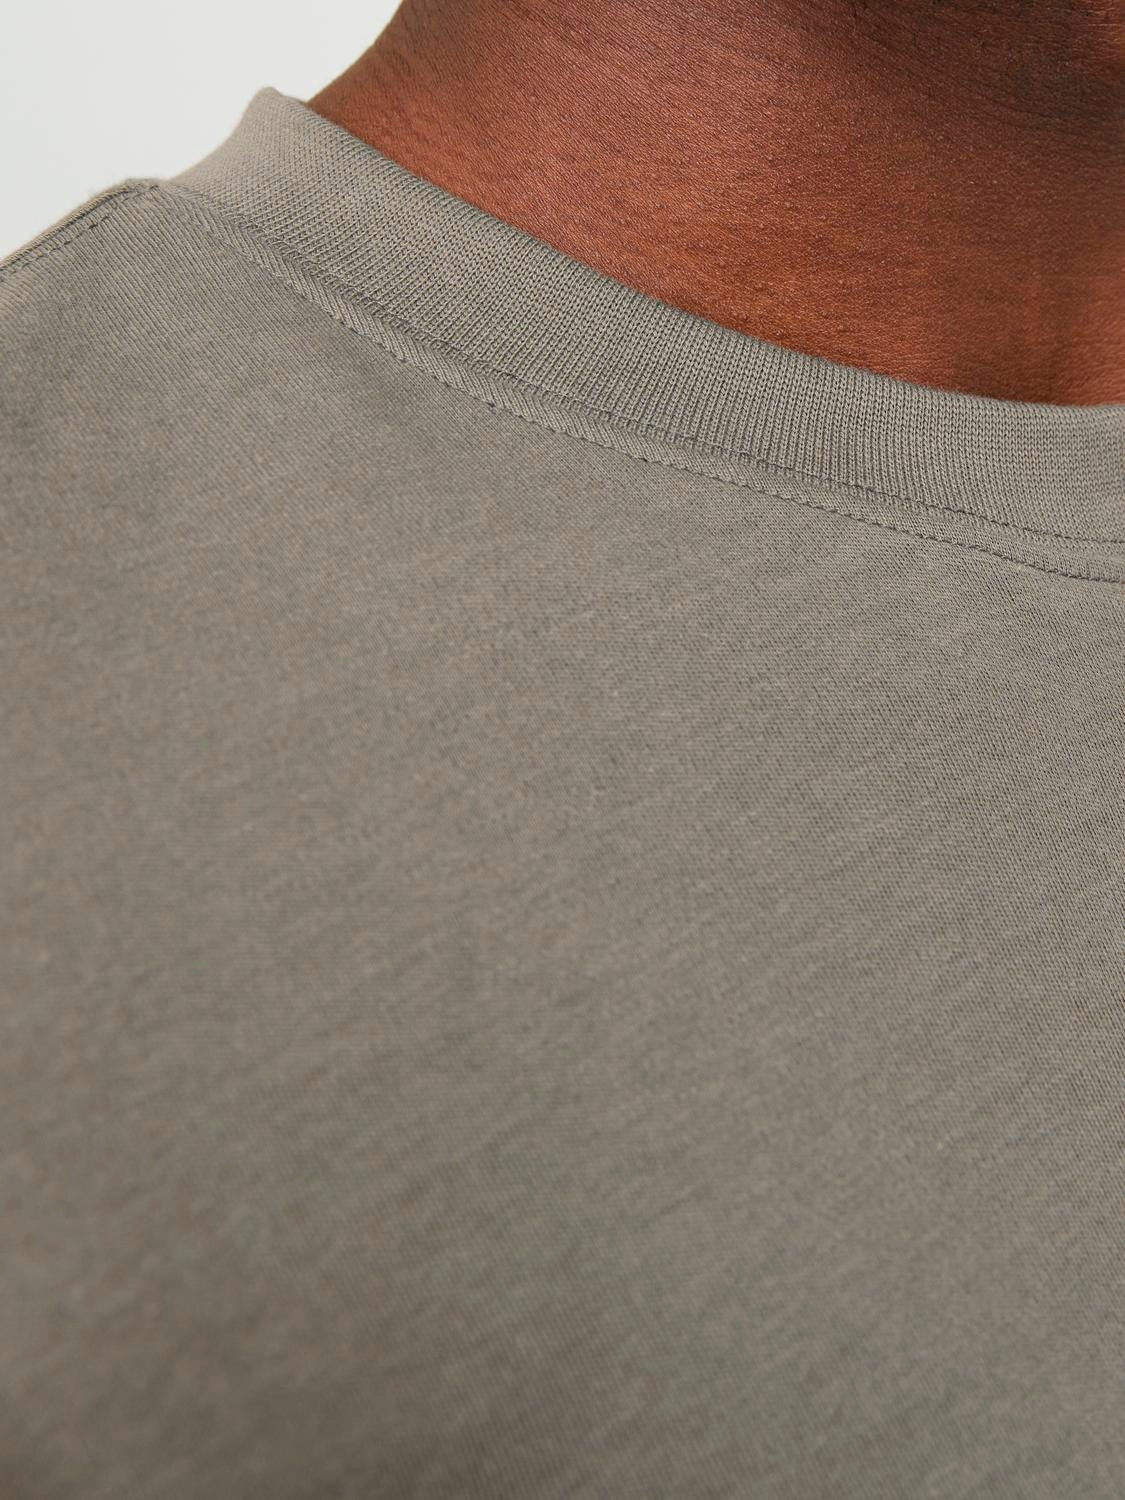 Jack & Jones Plain Crew neck T-shirt -Bungee Cord - 12254412